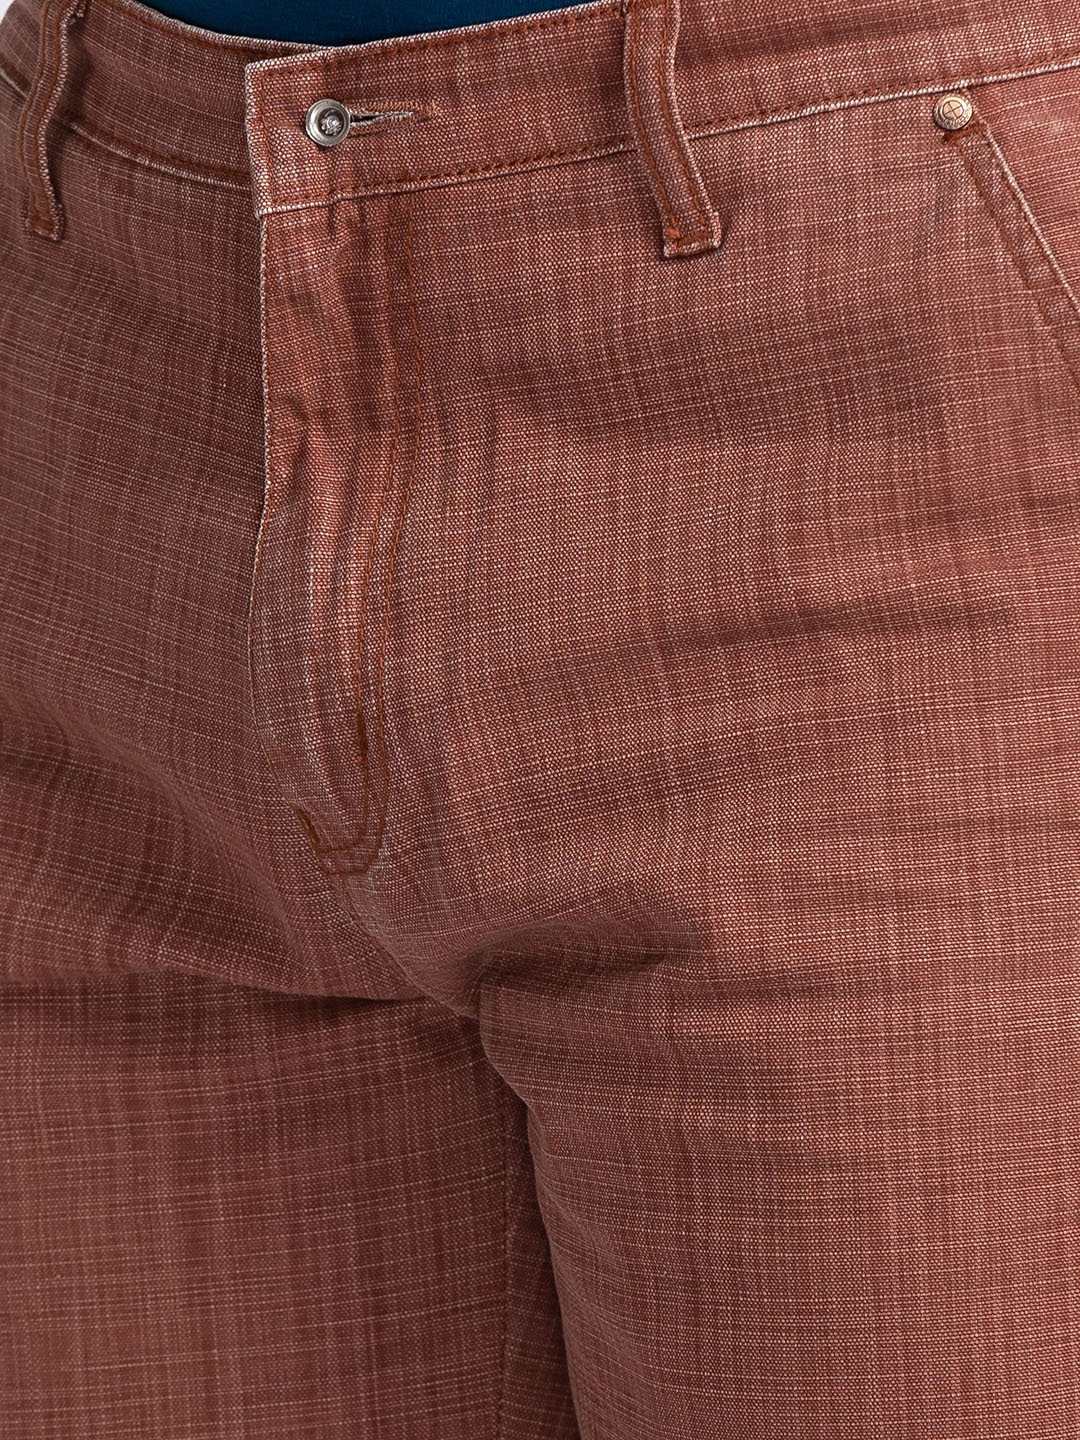 globus | Men's Brown Cotton Solid Shorts 4